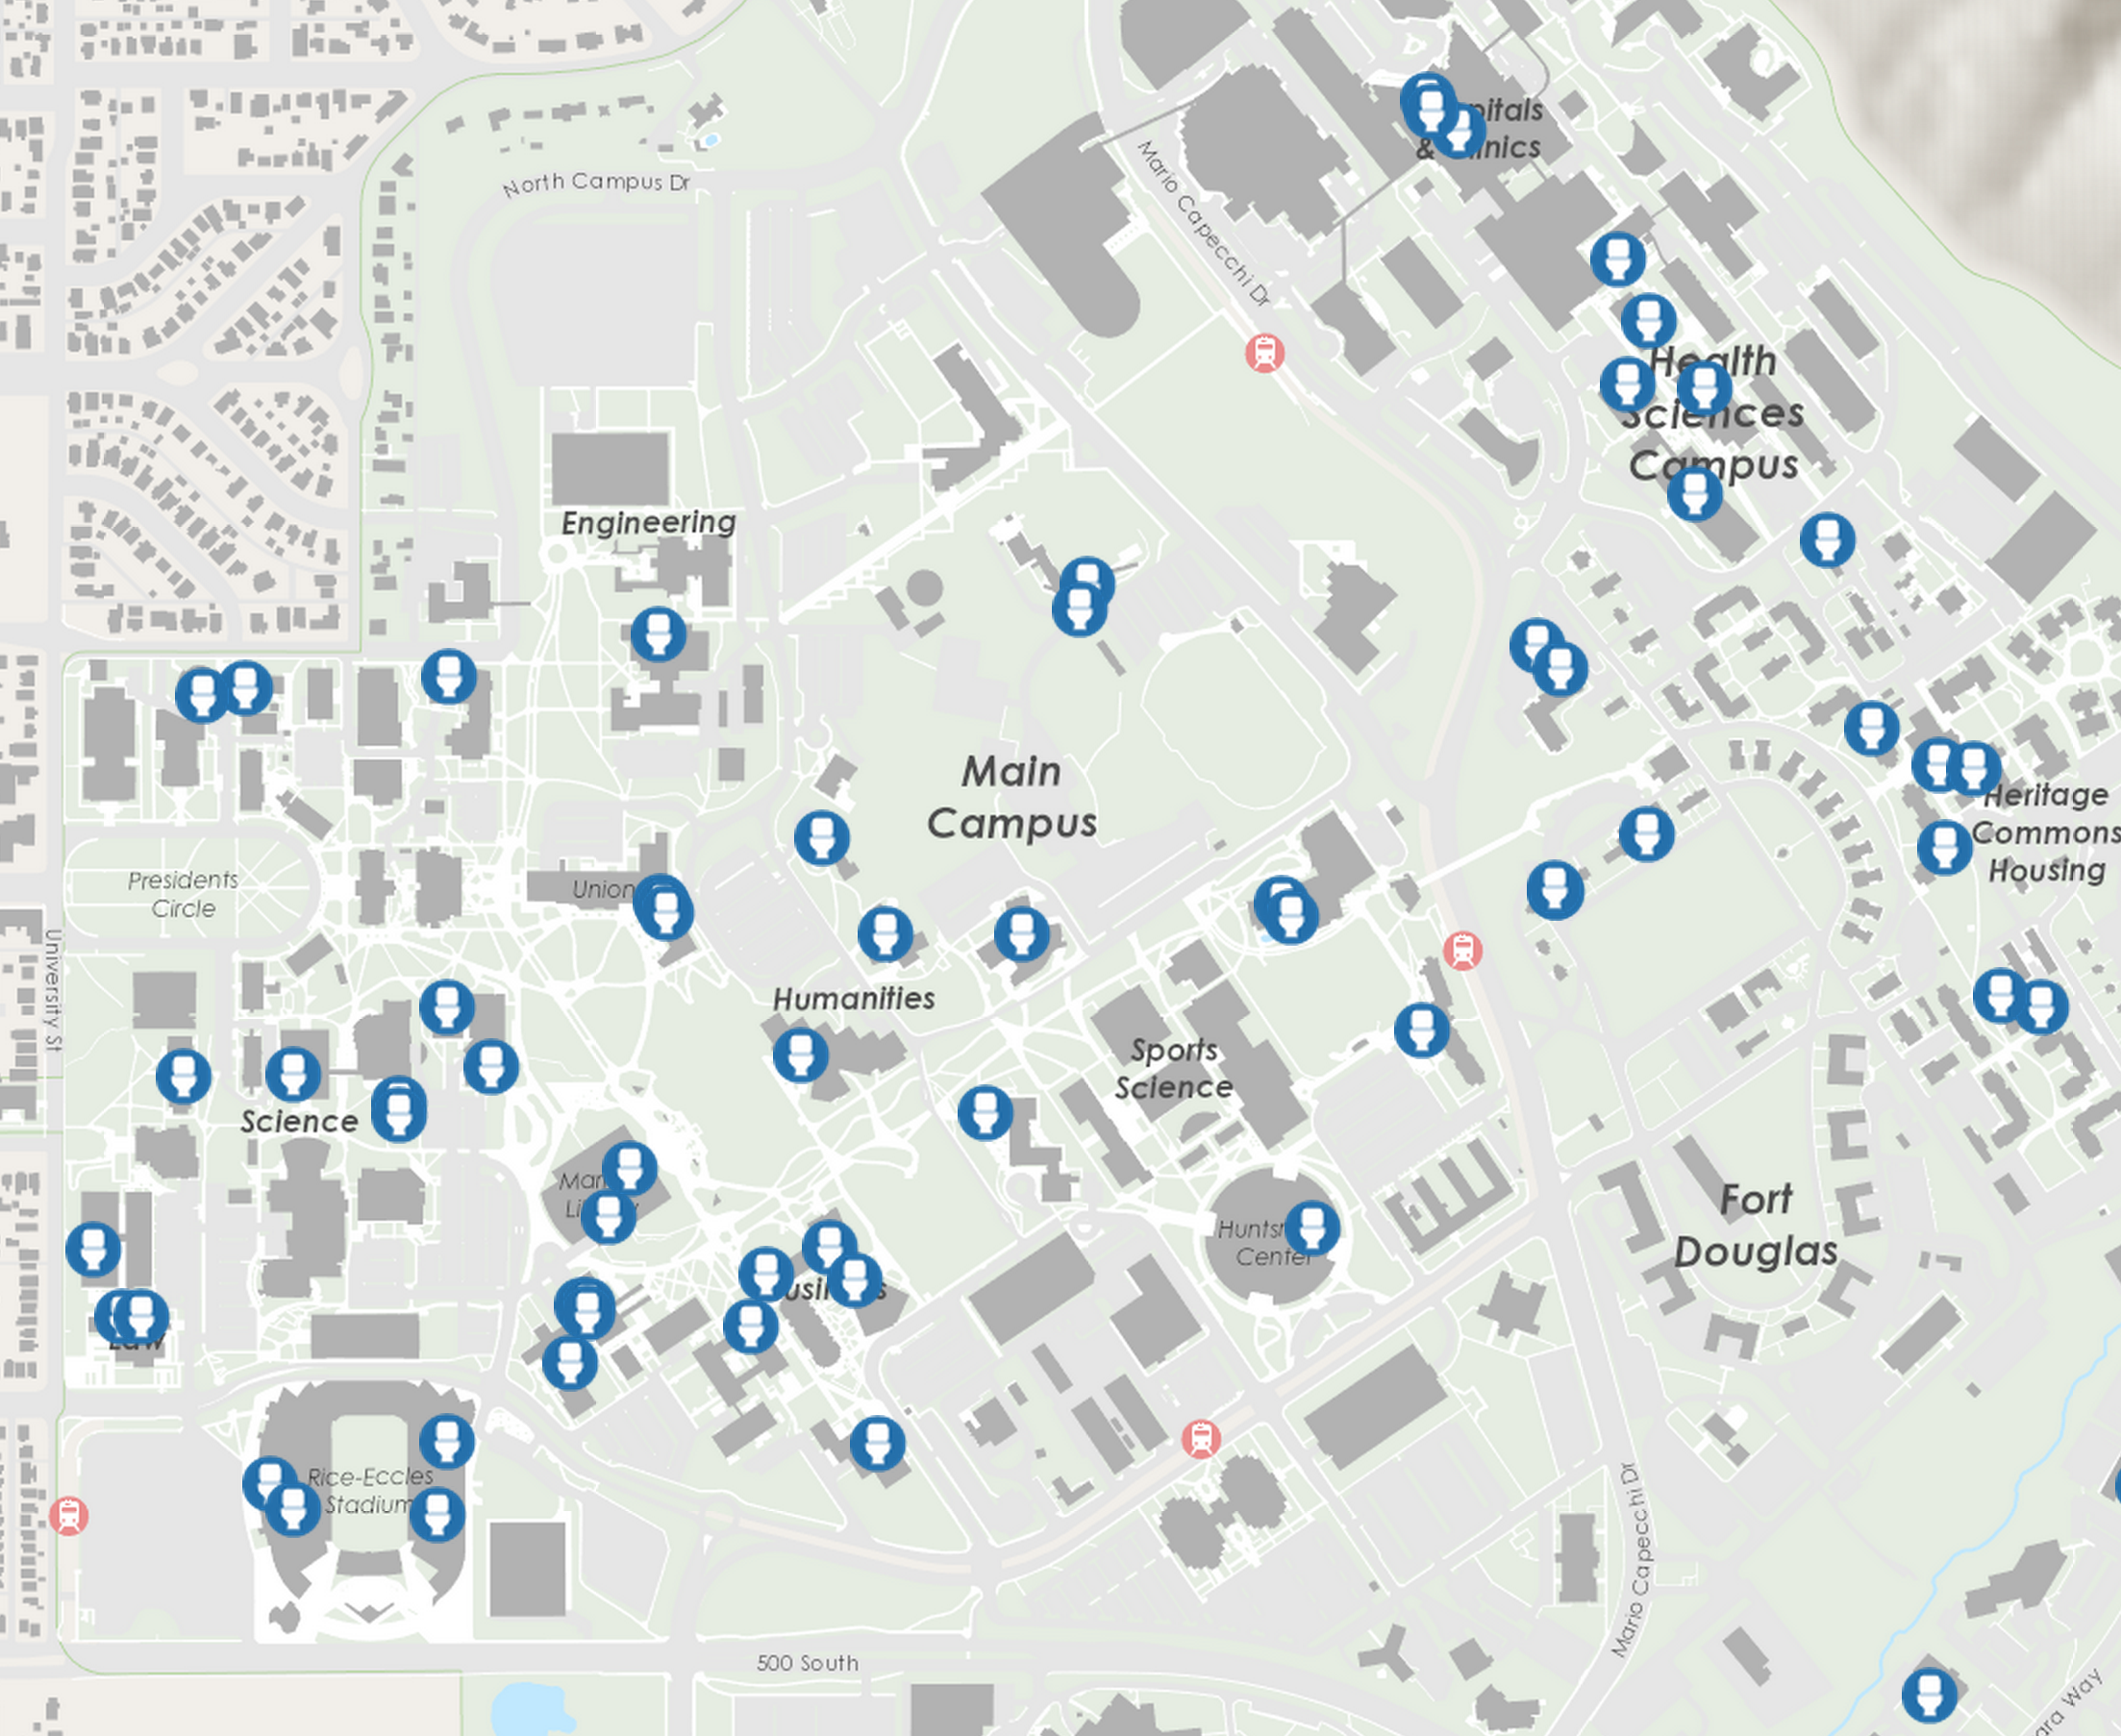 University of Utah map showing bathroom locations